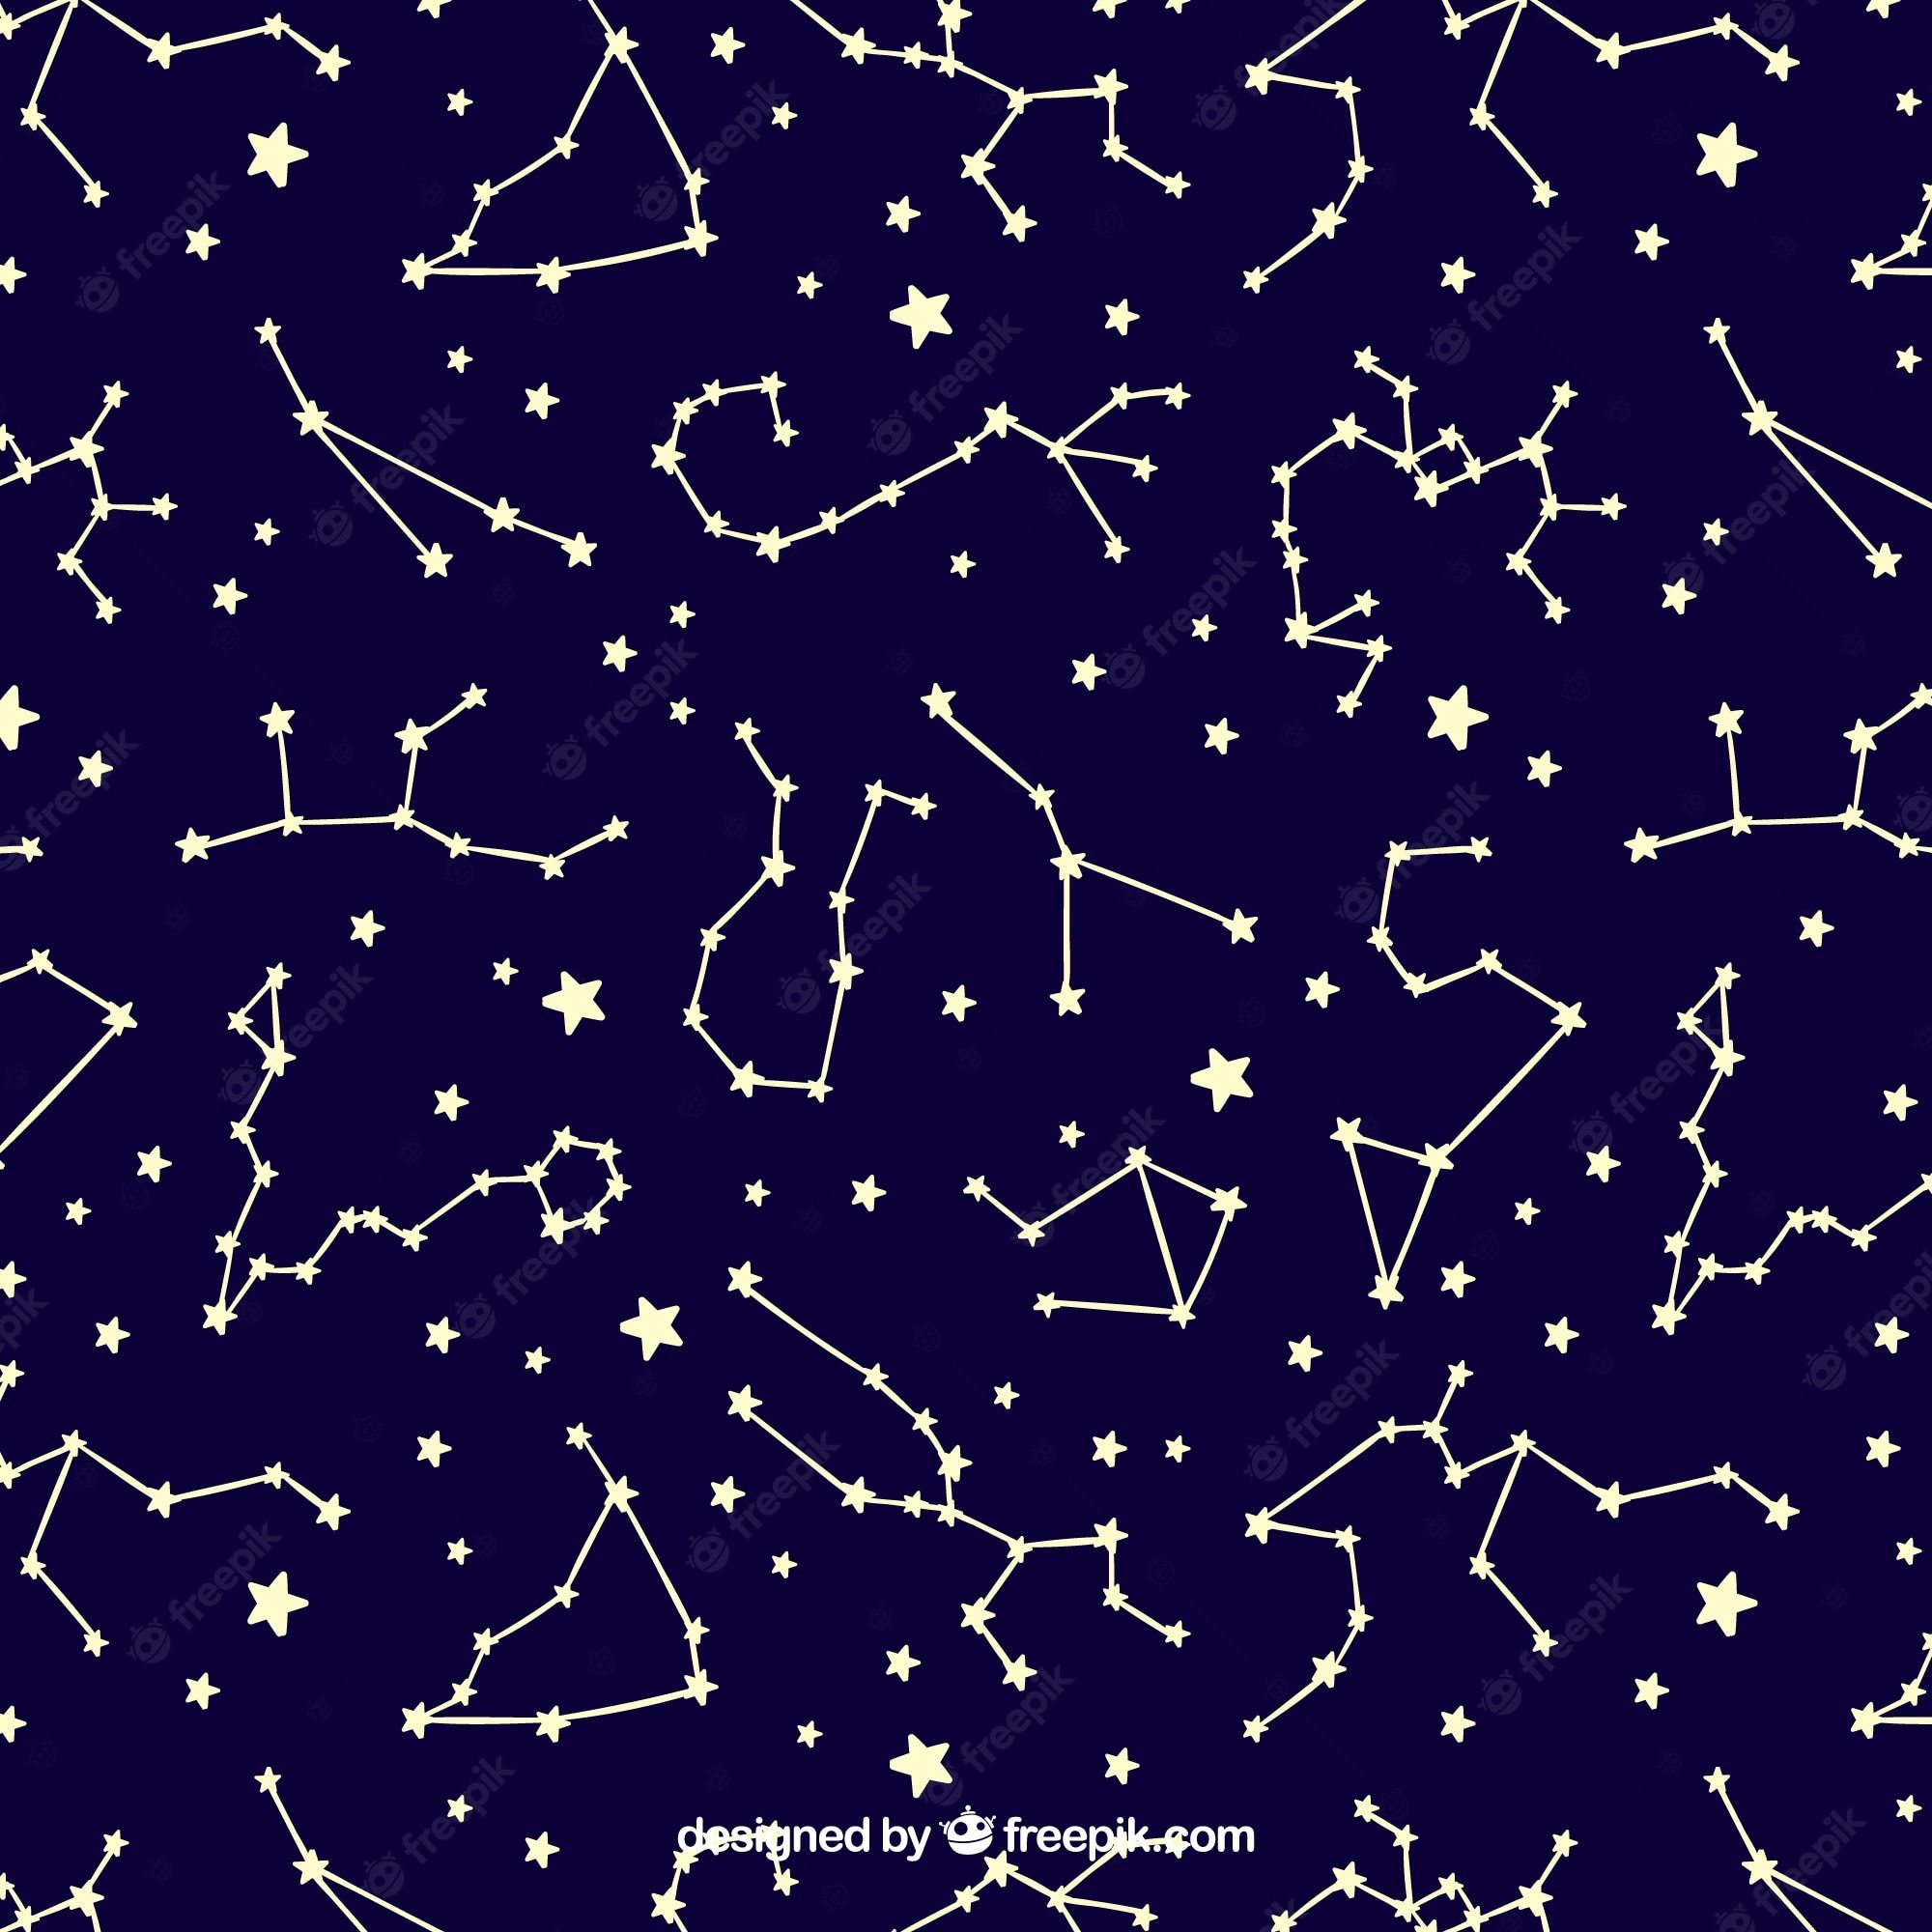 Constellation - Class 3 - Quizizz